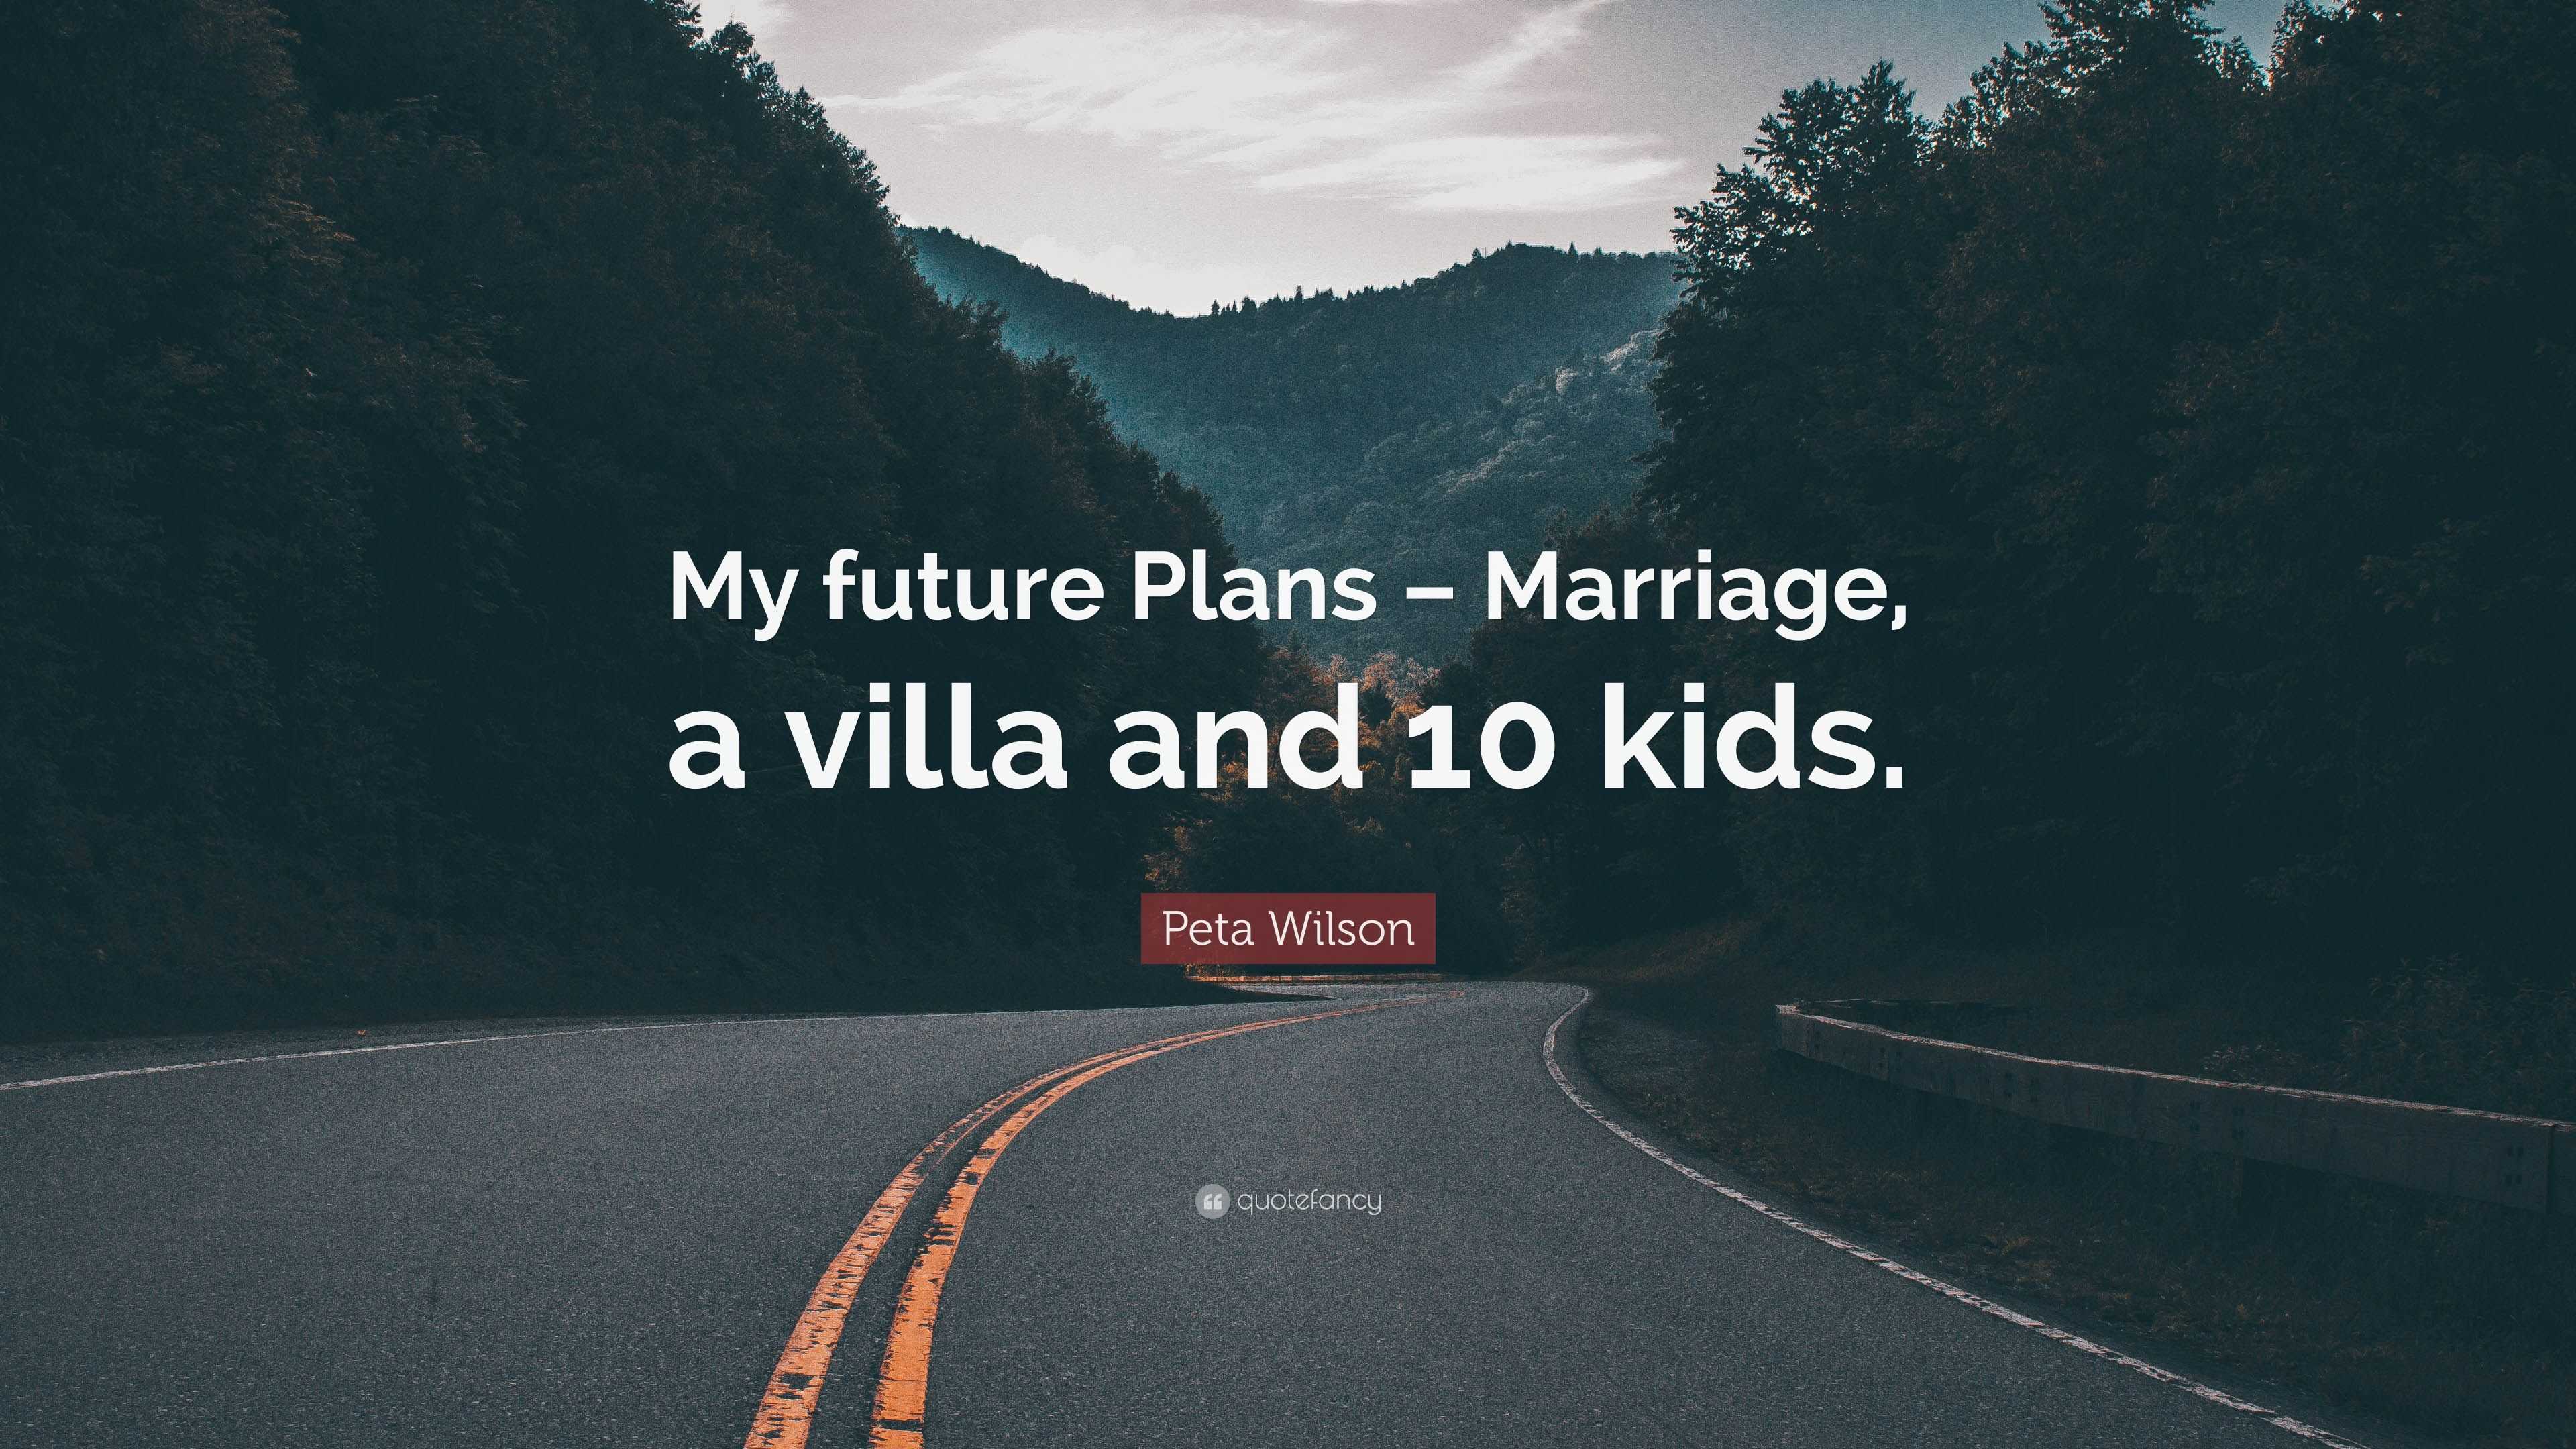 Peta Wilson Quote “My future Plans Marriage, a villa